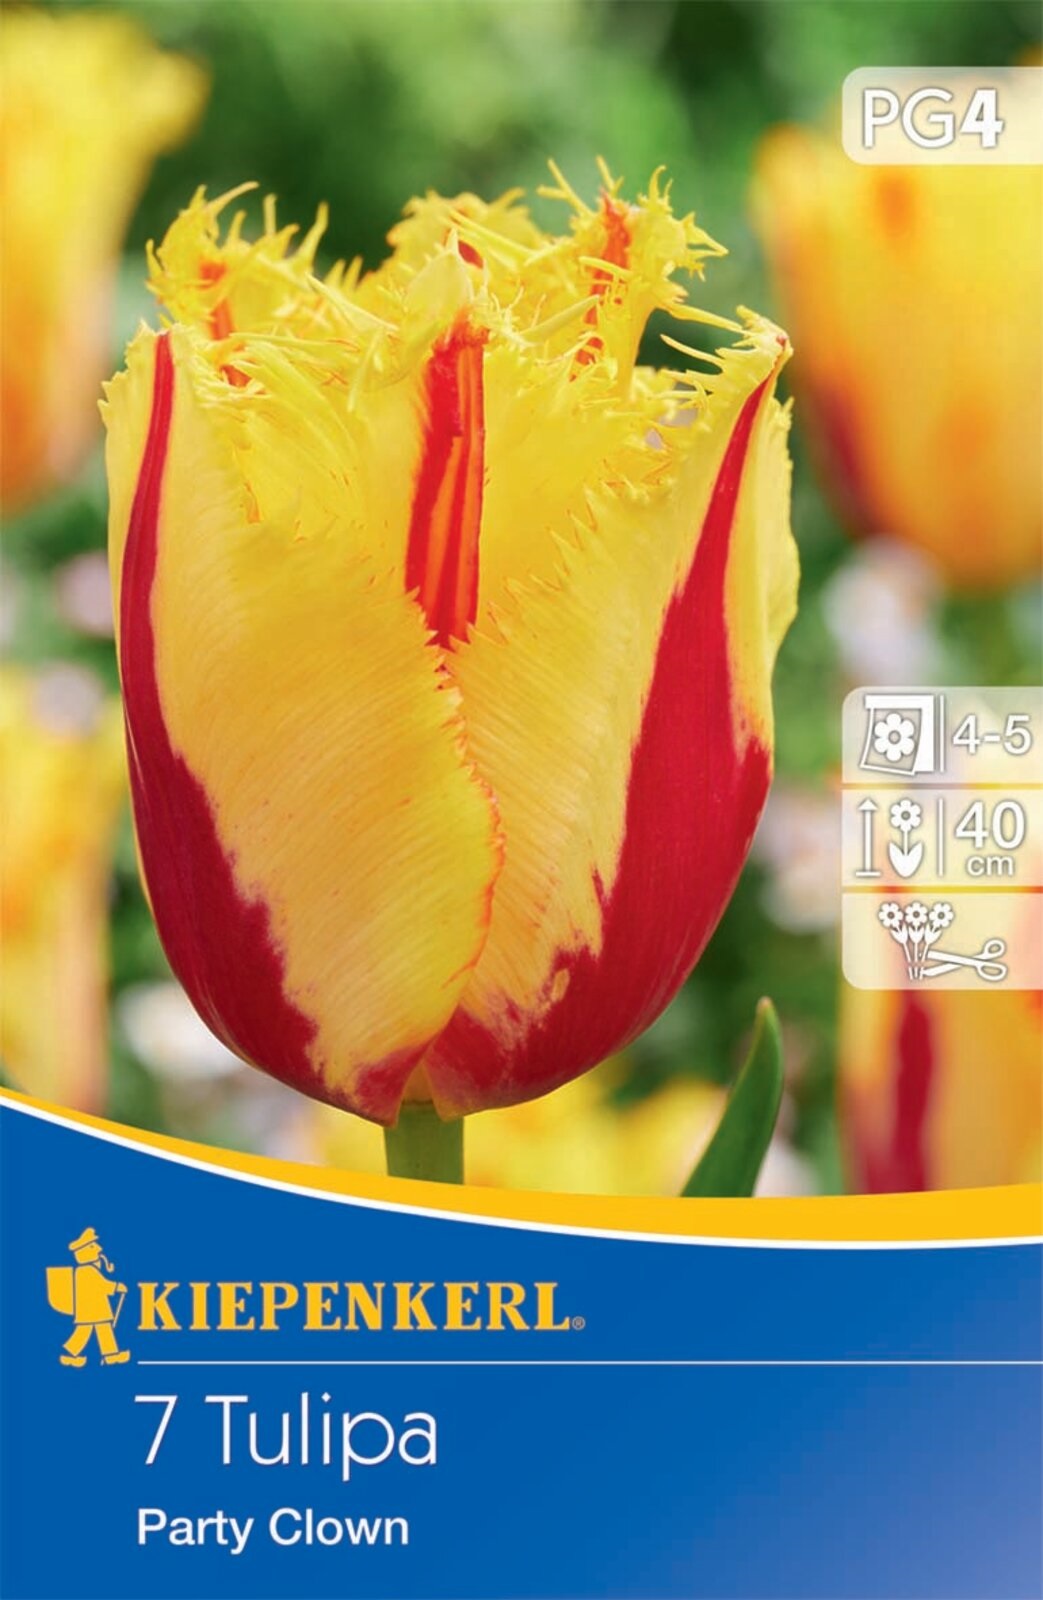 Bulb Tulip Party Clown 7 bulbs Kiepenkerl